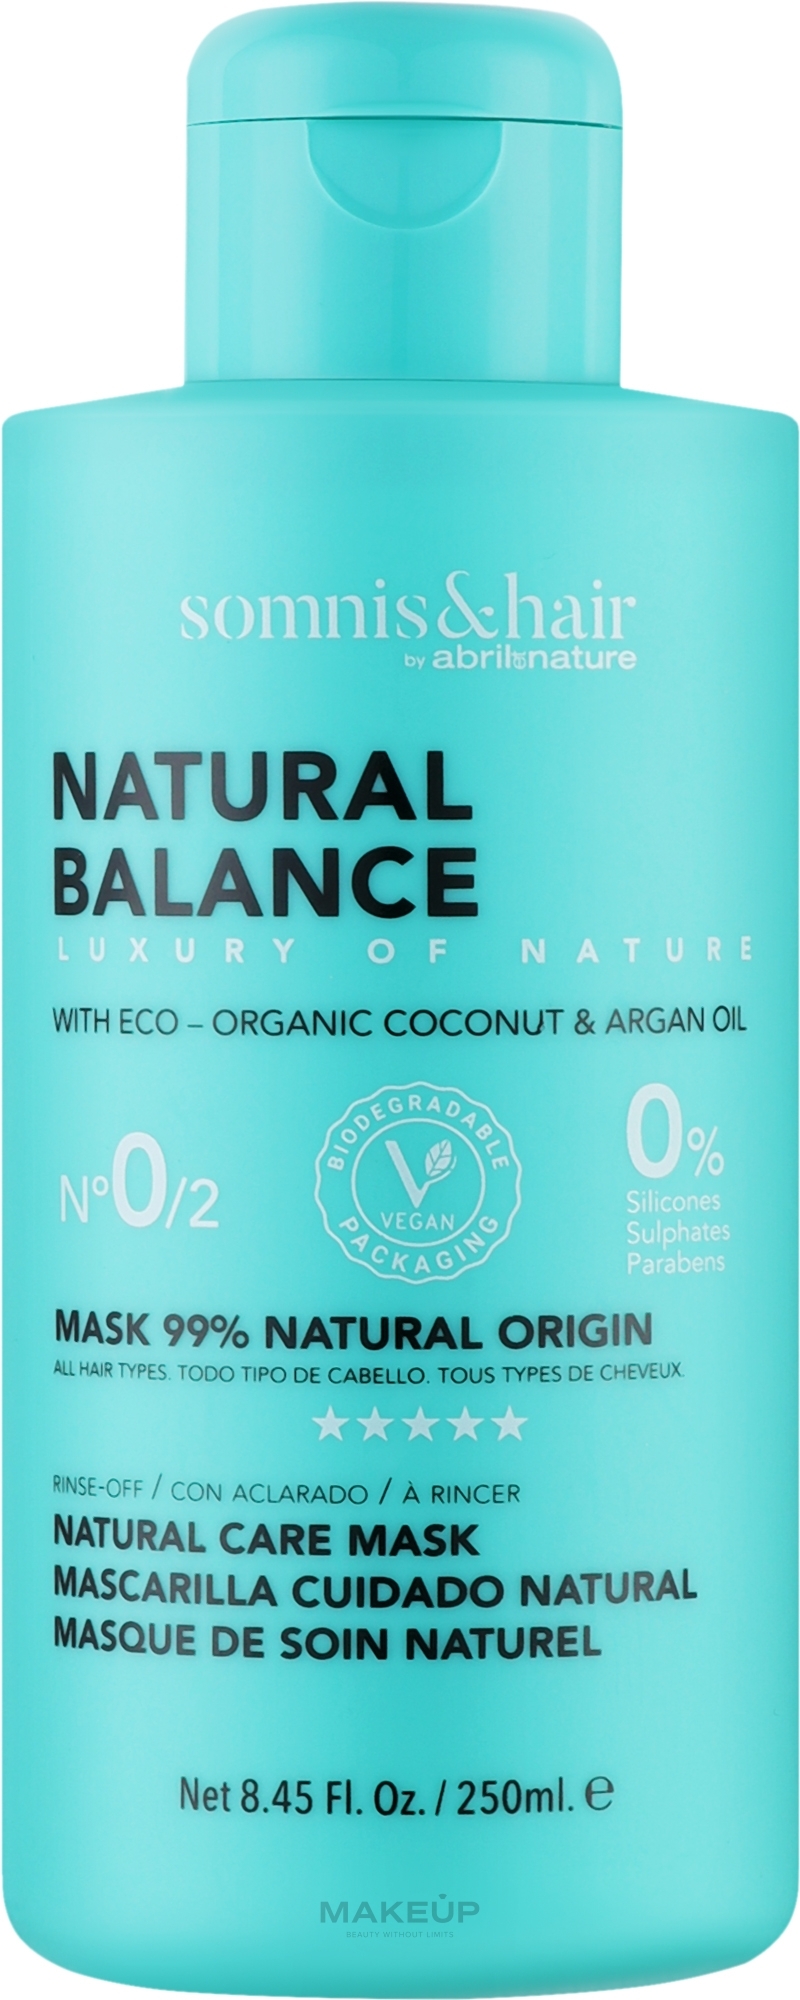 Маска з 99% натуральних інгредієнтів - Somnis & Hair 99% Natural Origin Mask — фото 250ml